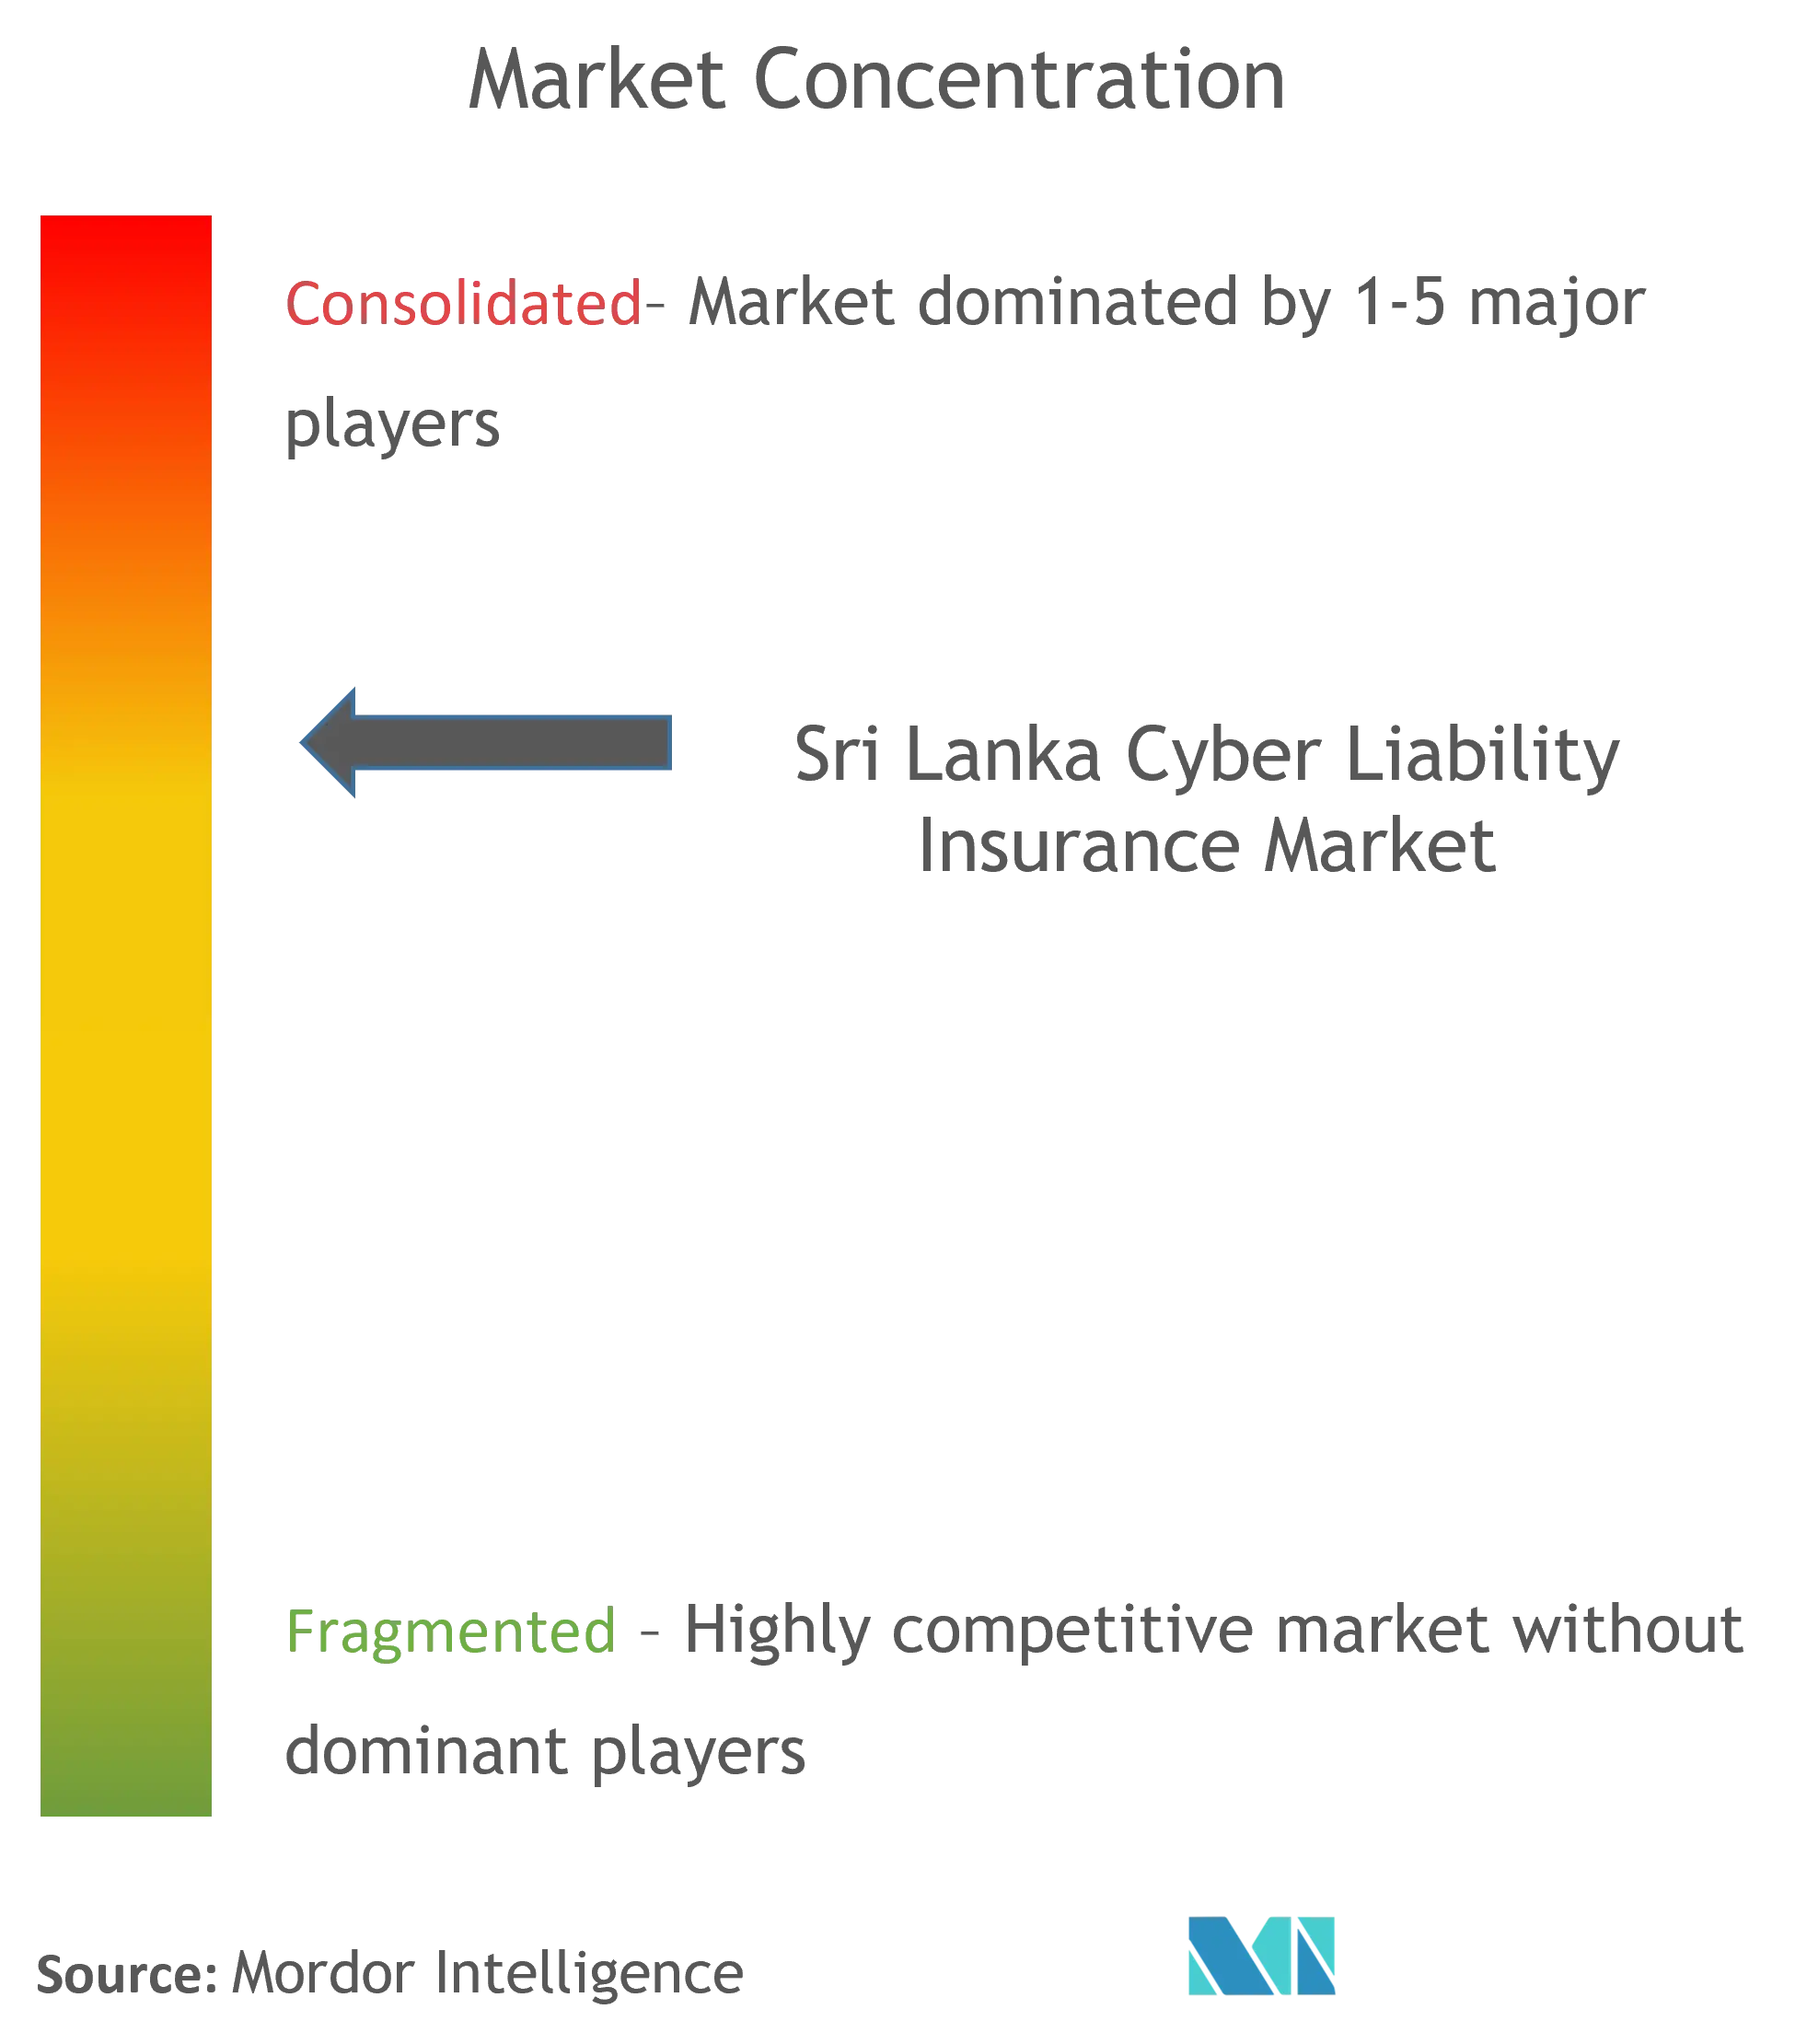 Sri Lanka Cyber (Liability) Insurance Market Concentration